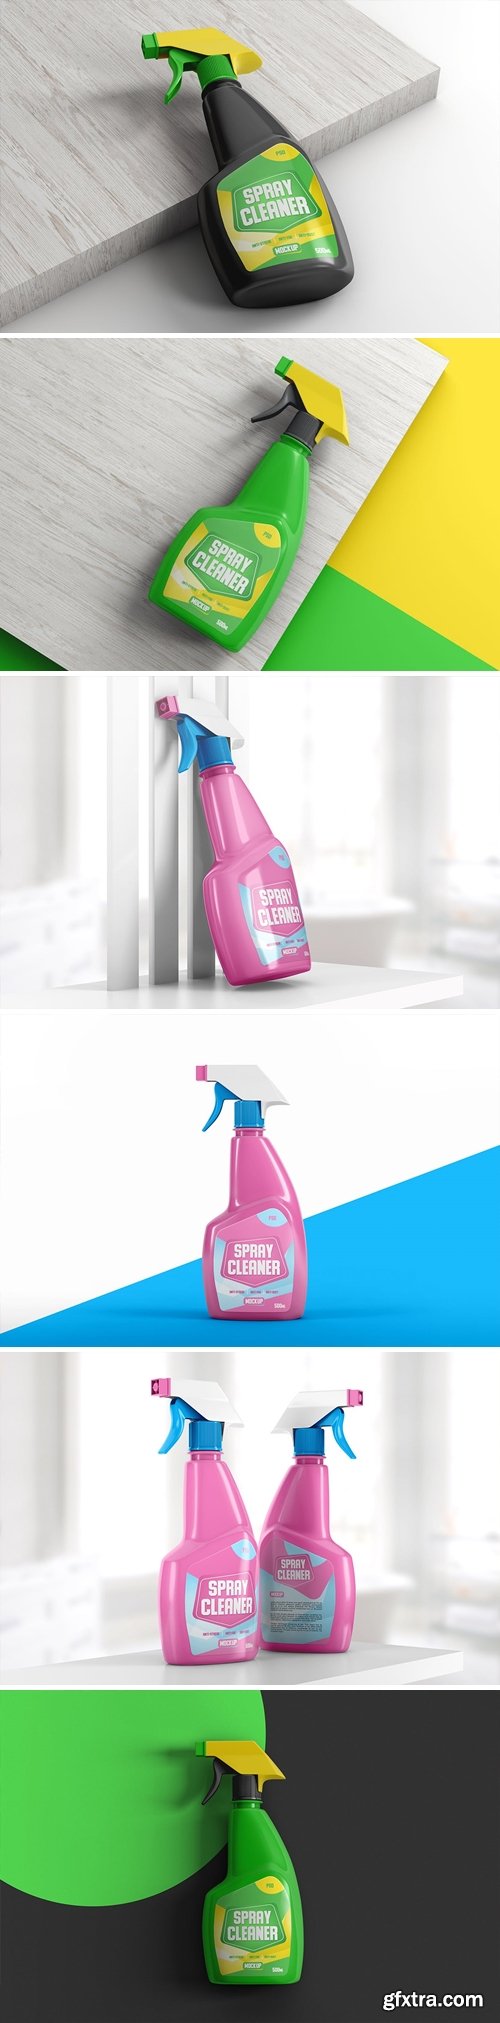 Spray Cleaner Bottle Mockup PTTN34V